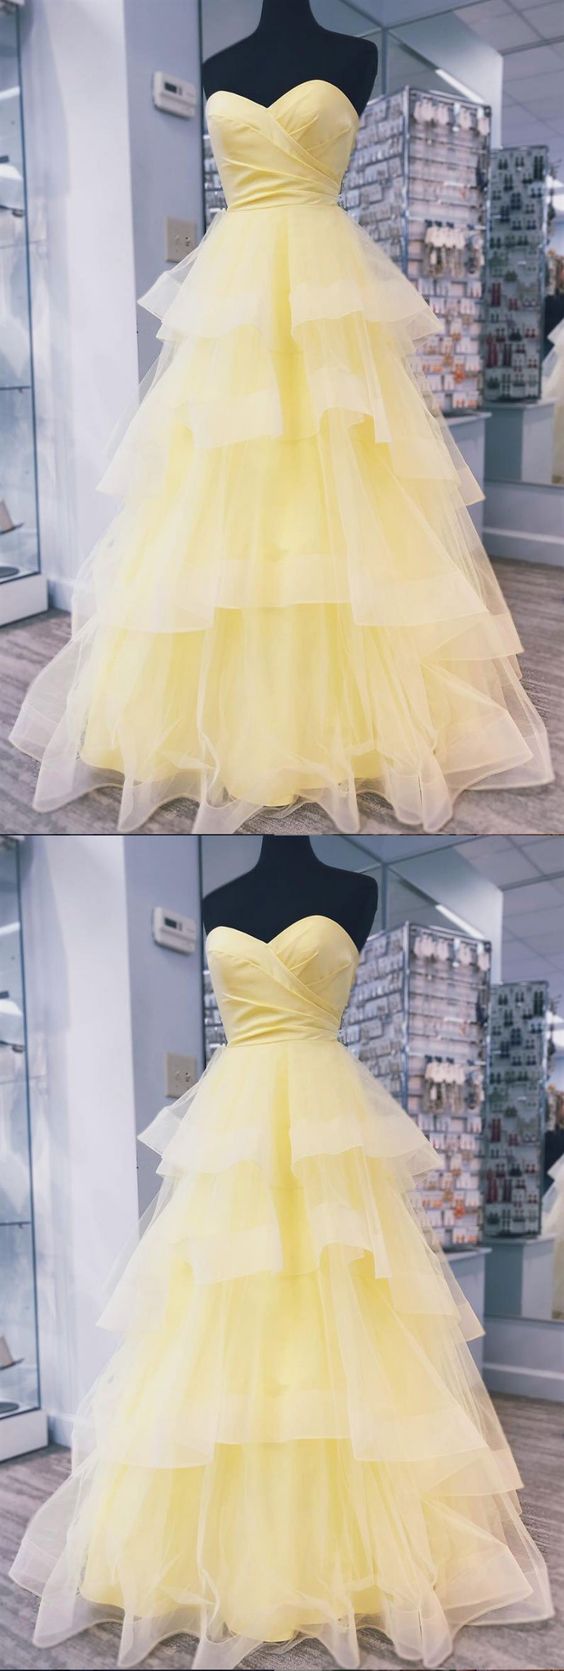 Sweethart Neck Floor Length Yellow Puffy Prom Dresses, Yellow Floor Length Puffy Formal Graduation Evening Dresses cg2182